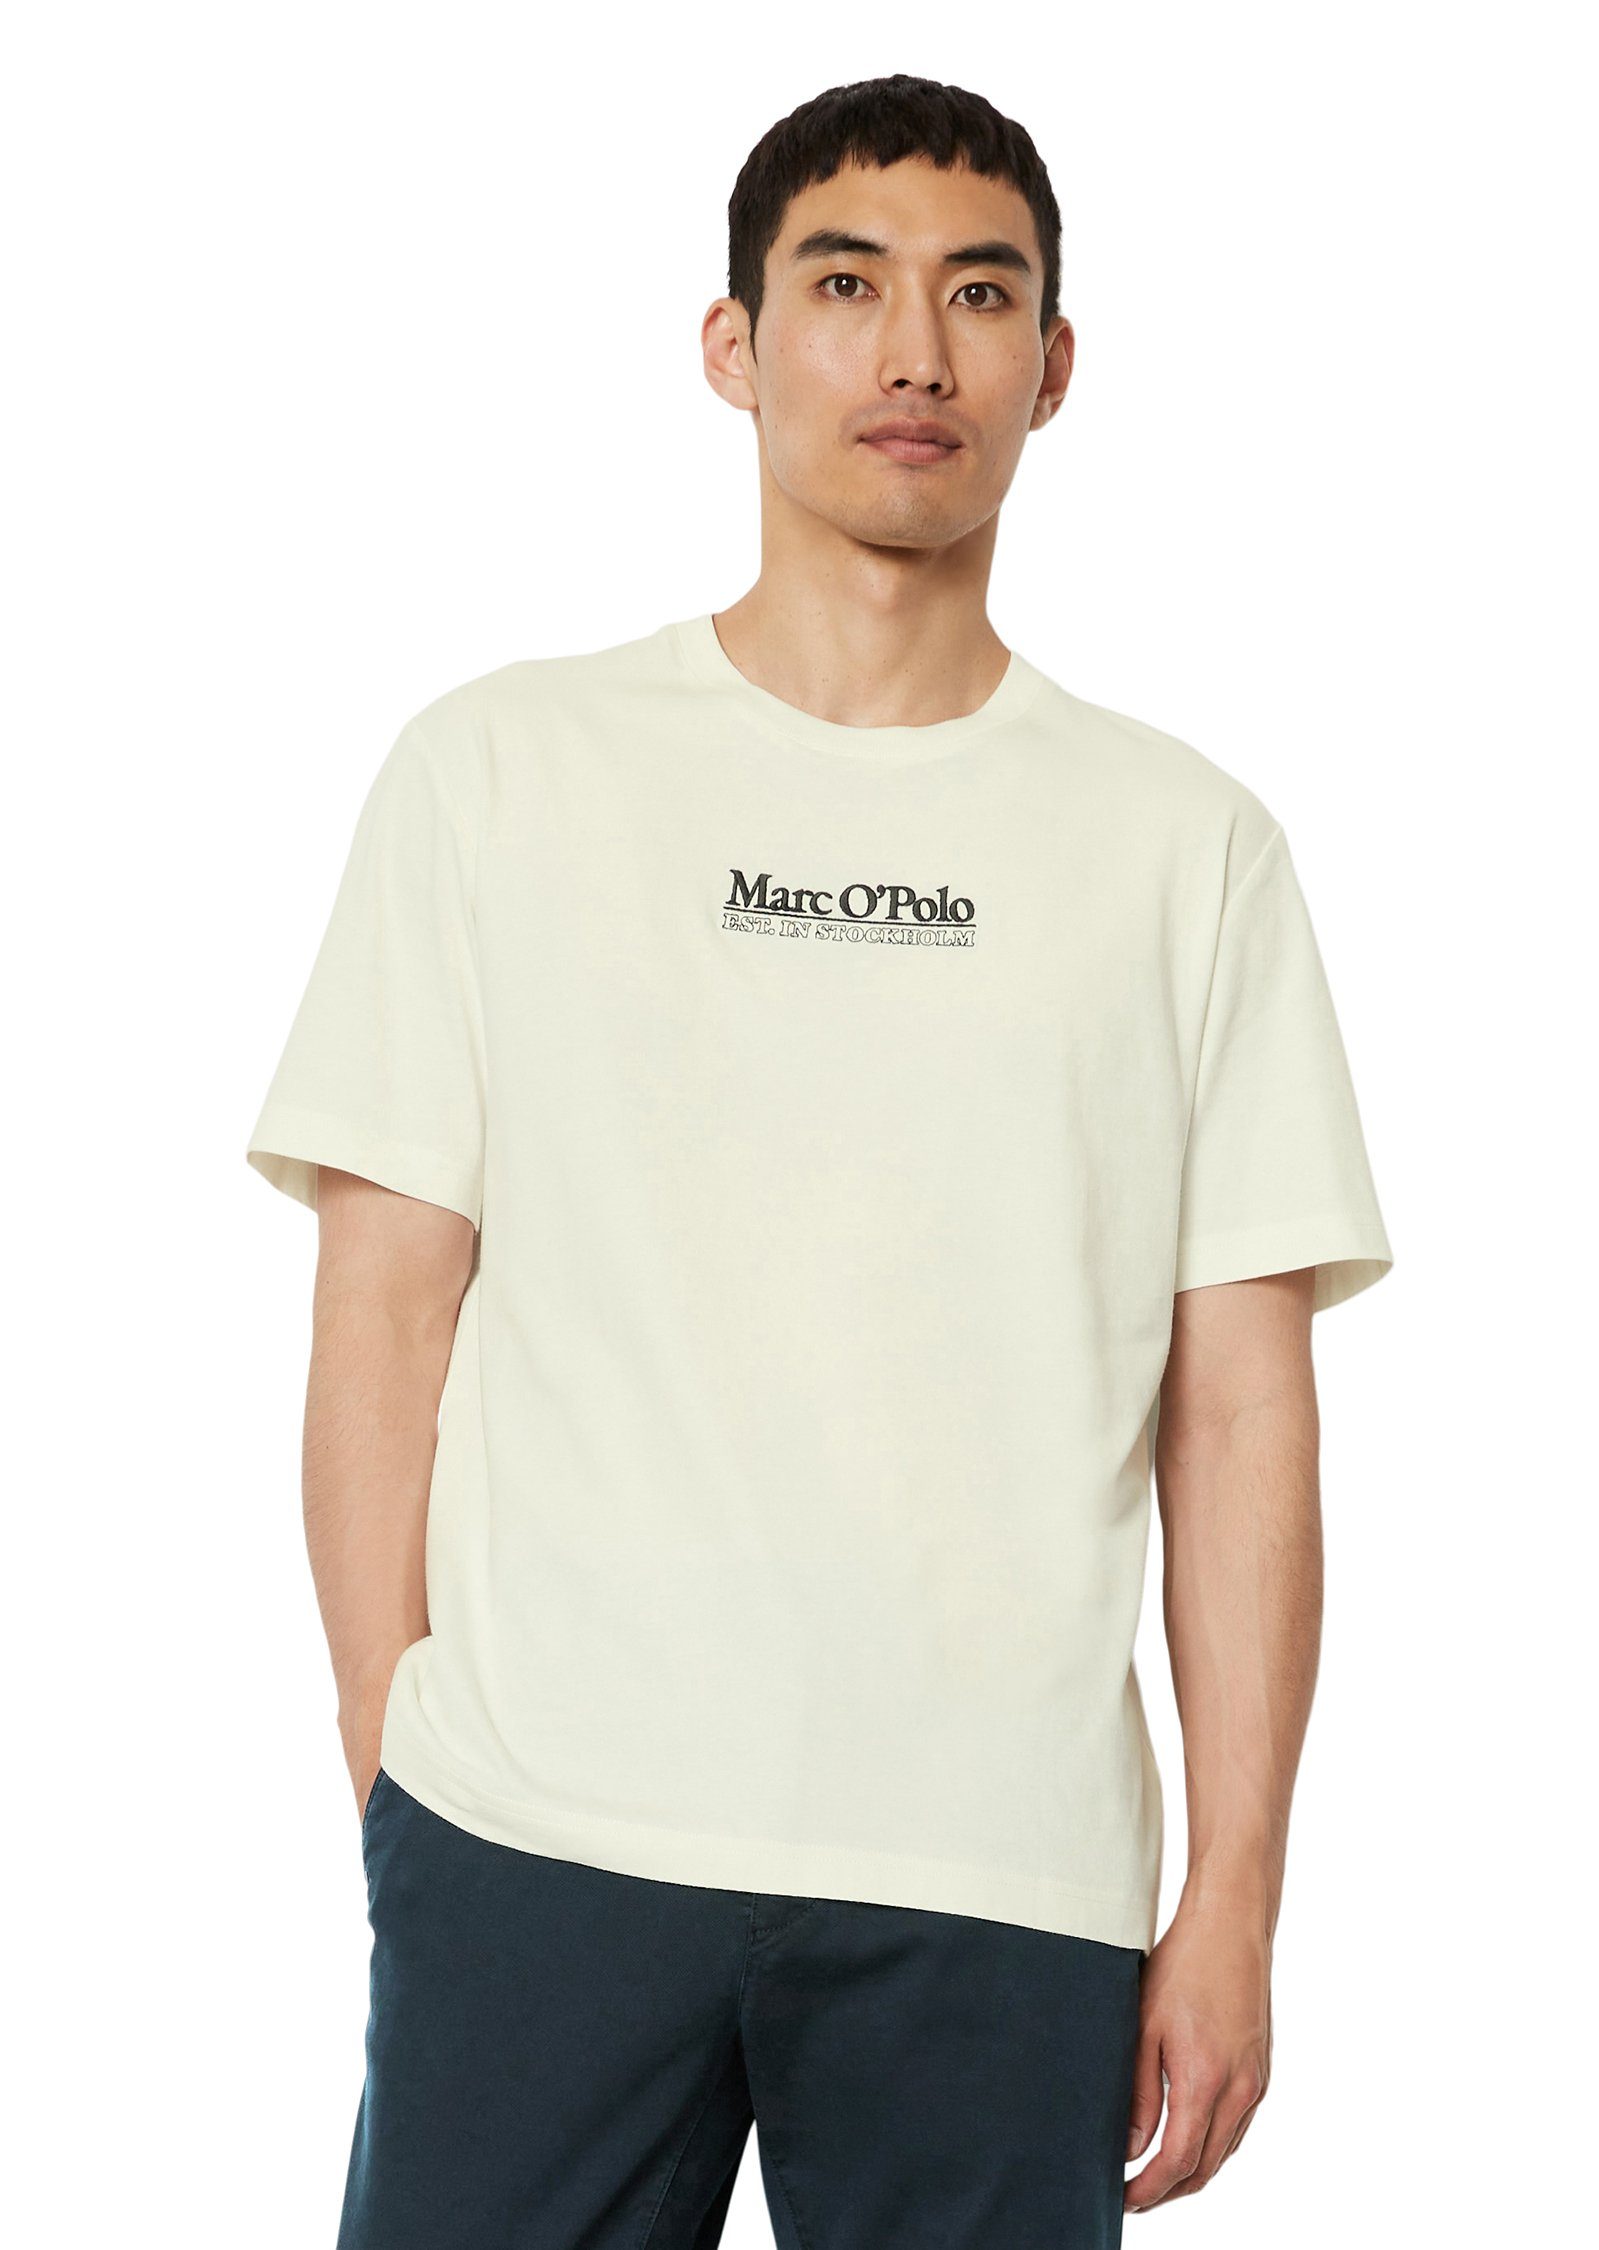 Marc O'Polo T-Shirt print mulit